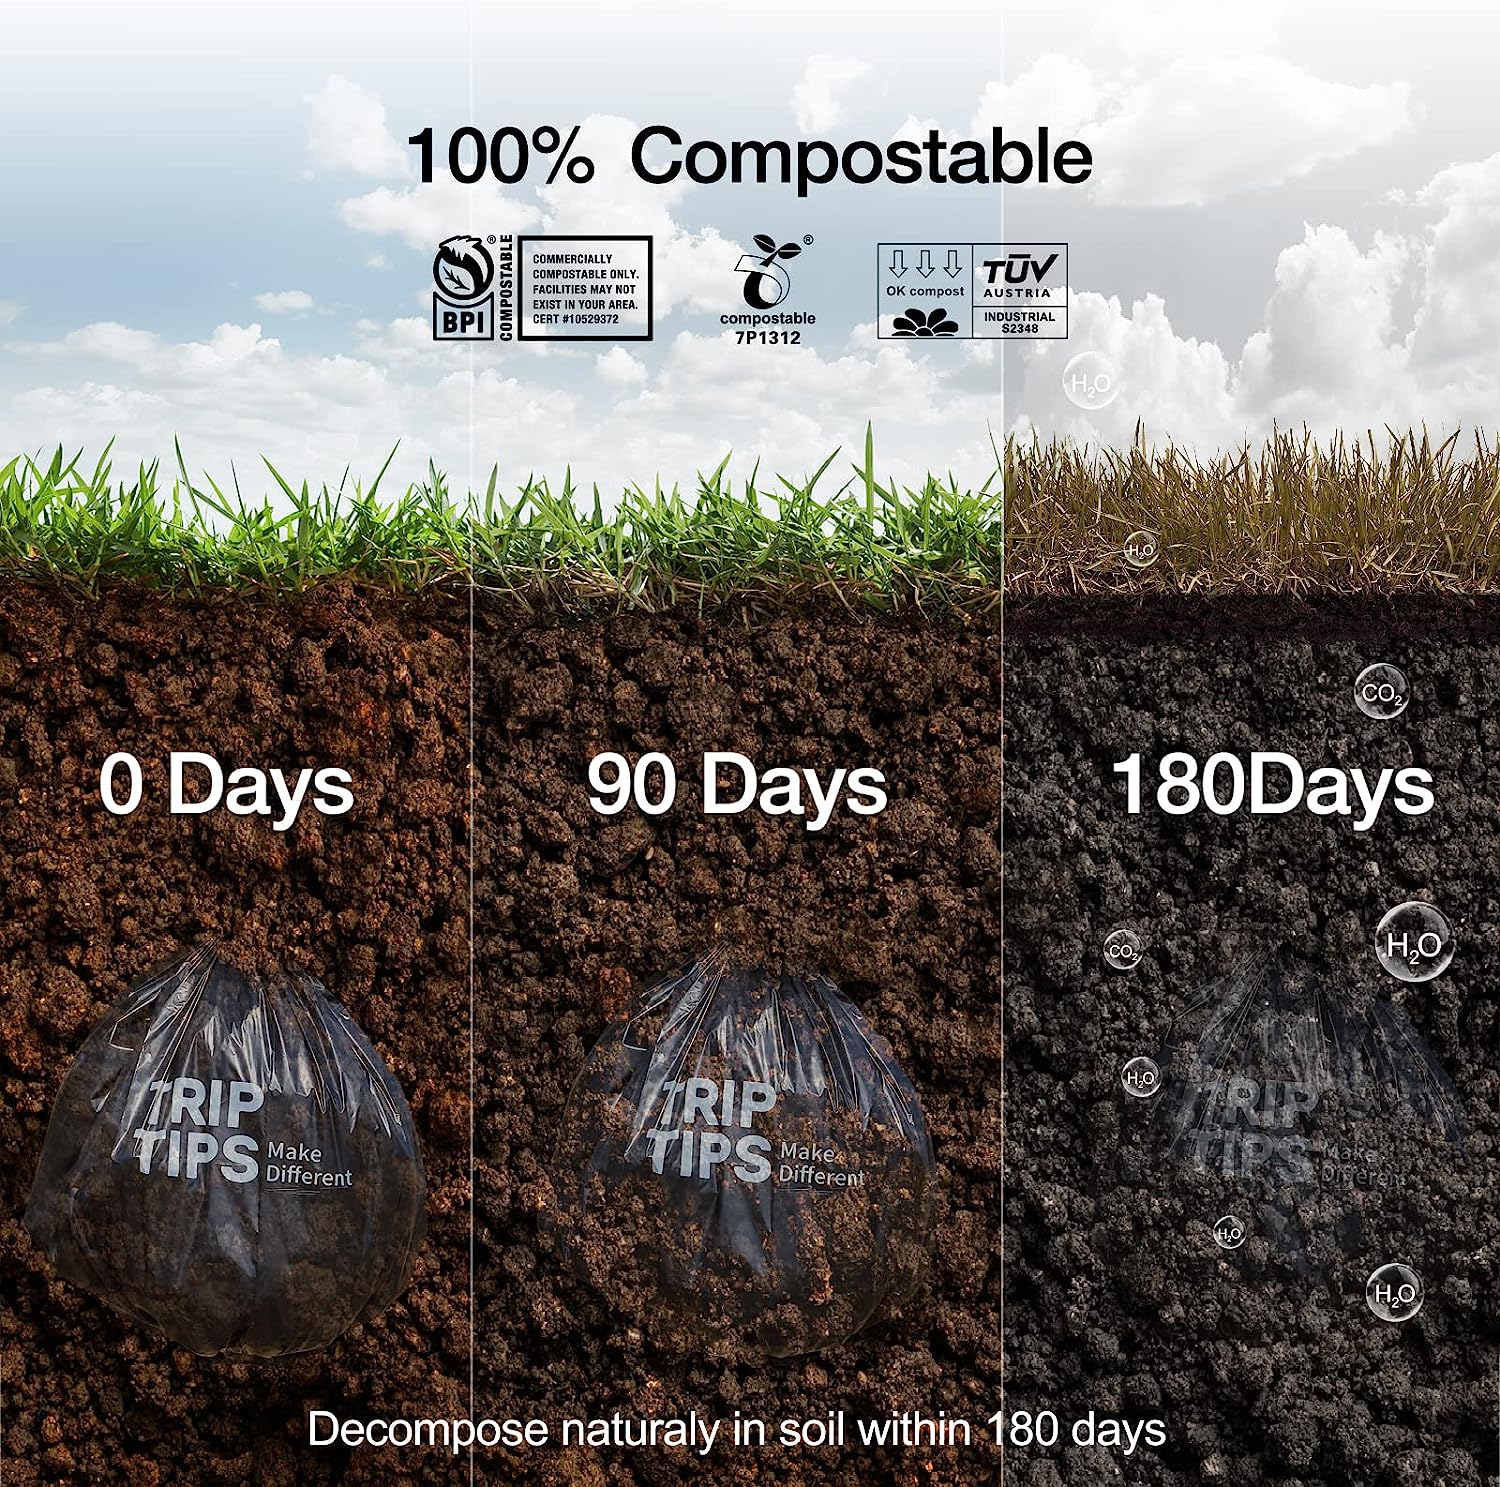 TRIPTIPS Biodegradable Portable Toilet Bags 8 gallon｜40 Count Camping Toilet Bags for Portable Potty, 100% Leak-Proof